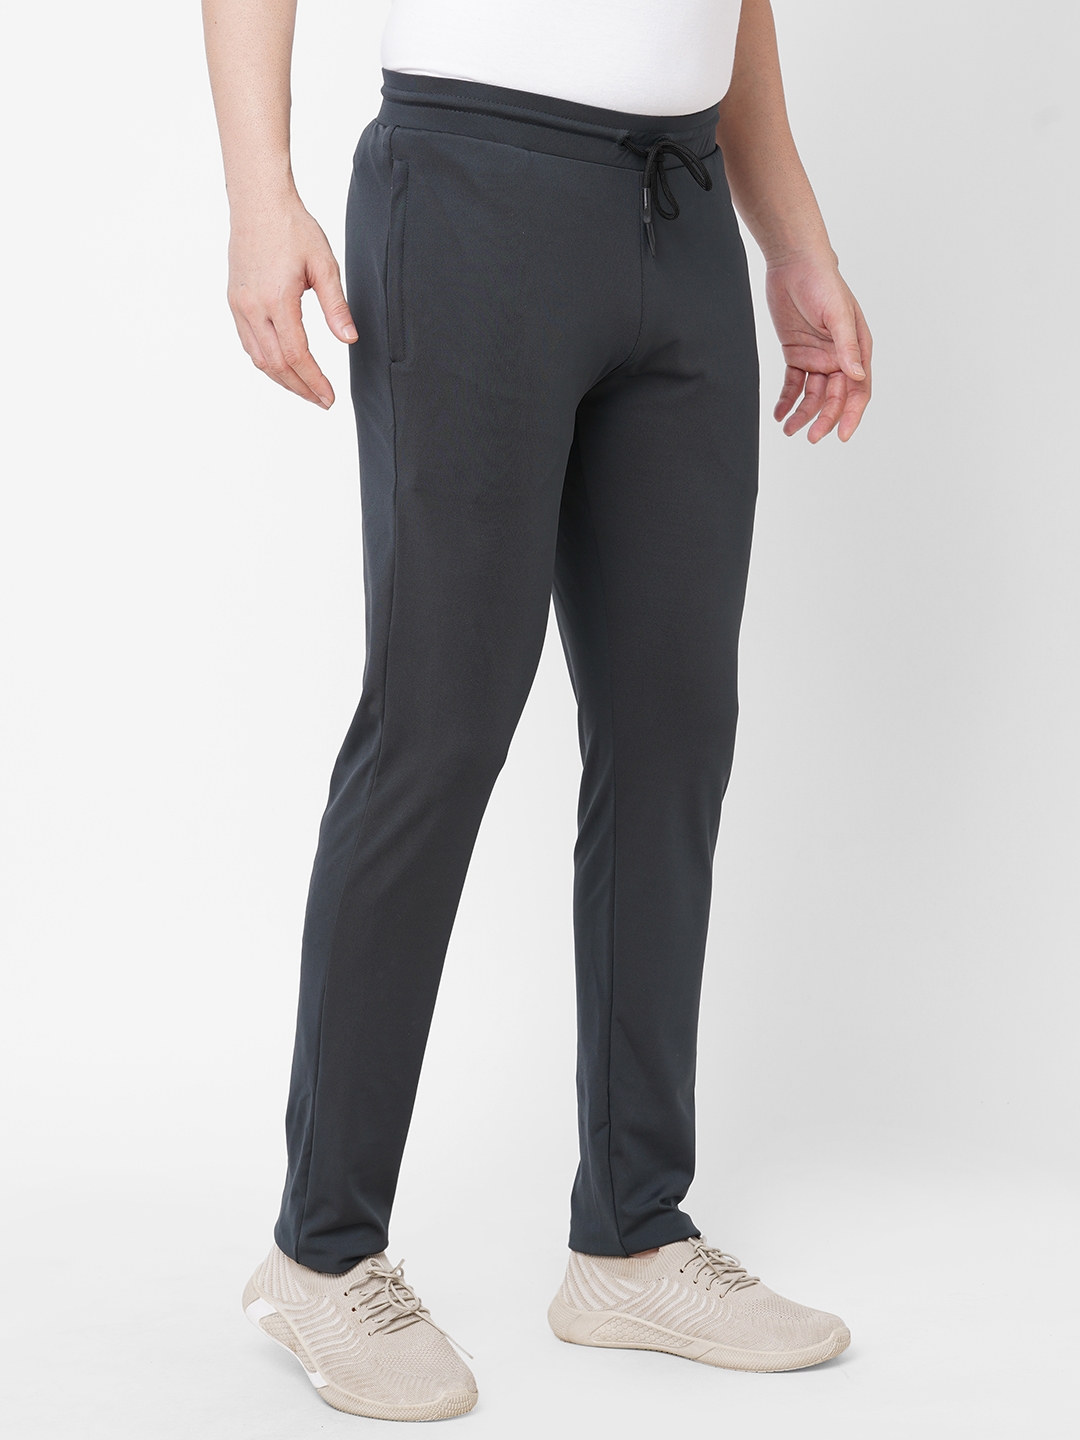 JMR USA INC Men's Fleece Pants with Pockets Cuffed Bottom Track Pants  Joggers for Men, Charcoal Gray 3XL - Walmart.com